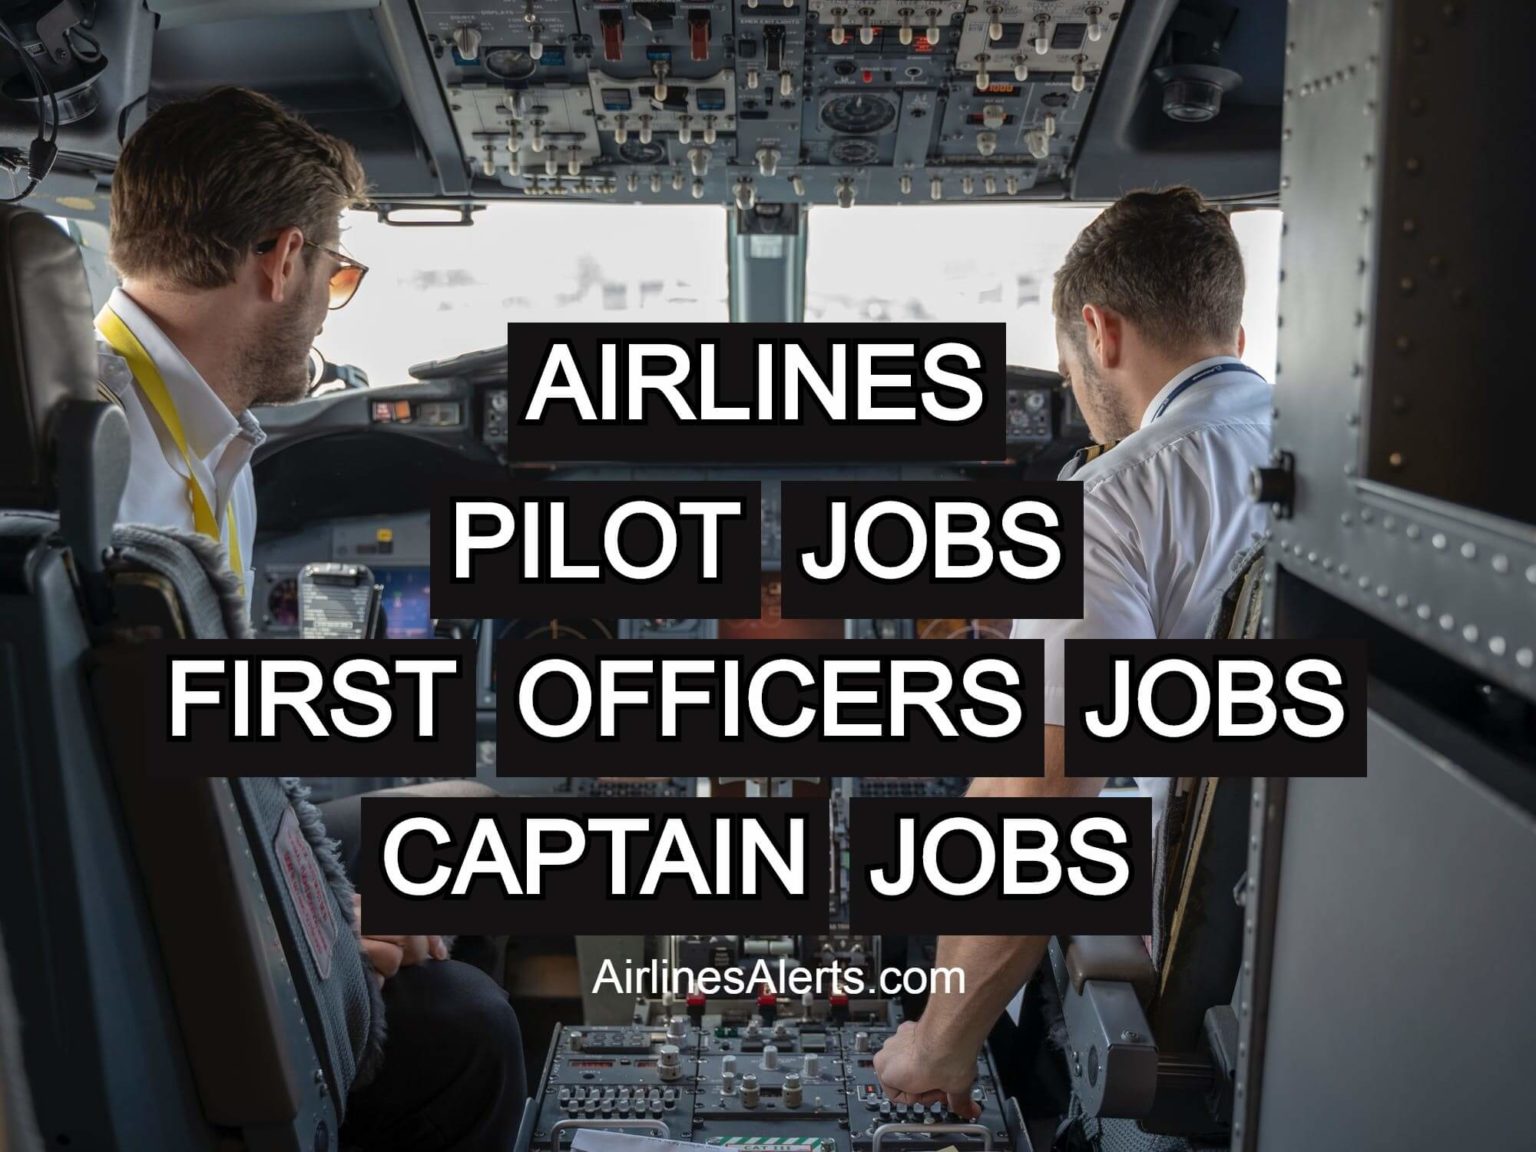 low time pilot jobs near me